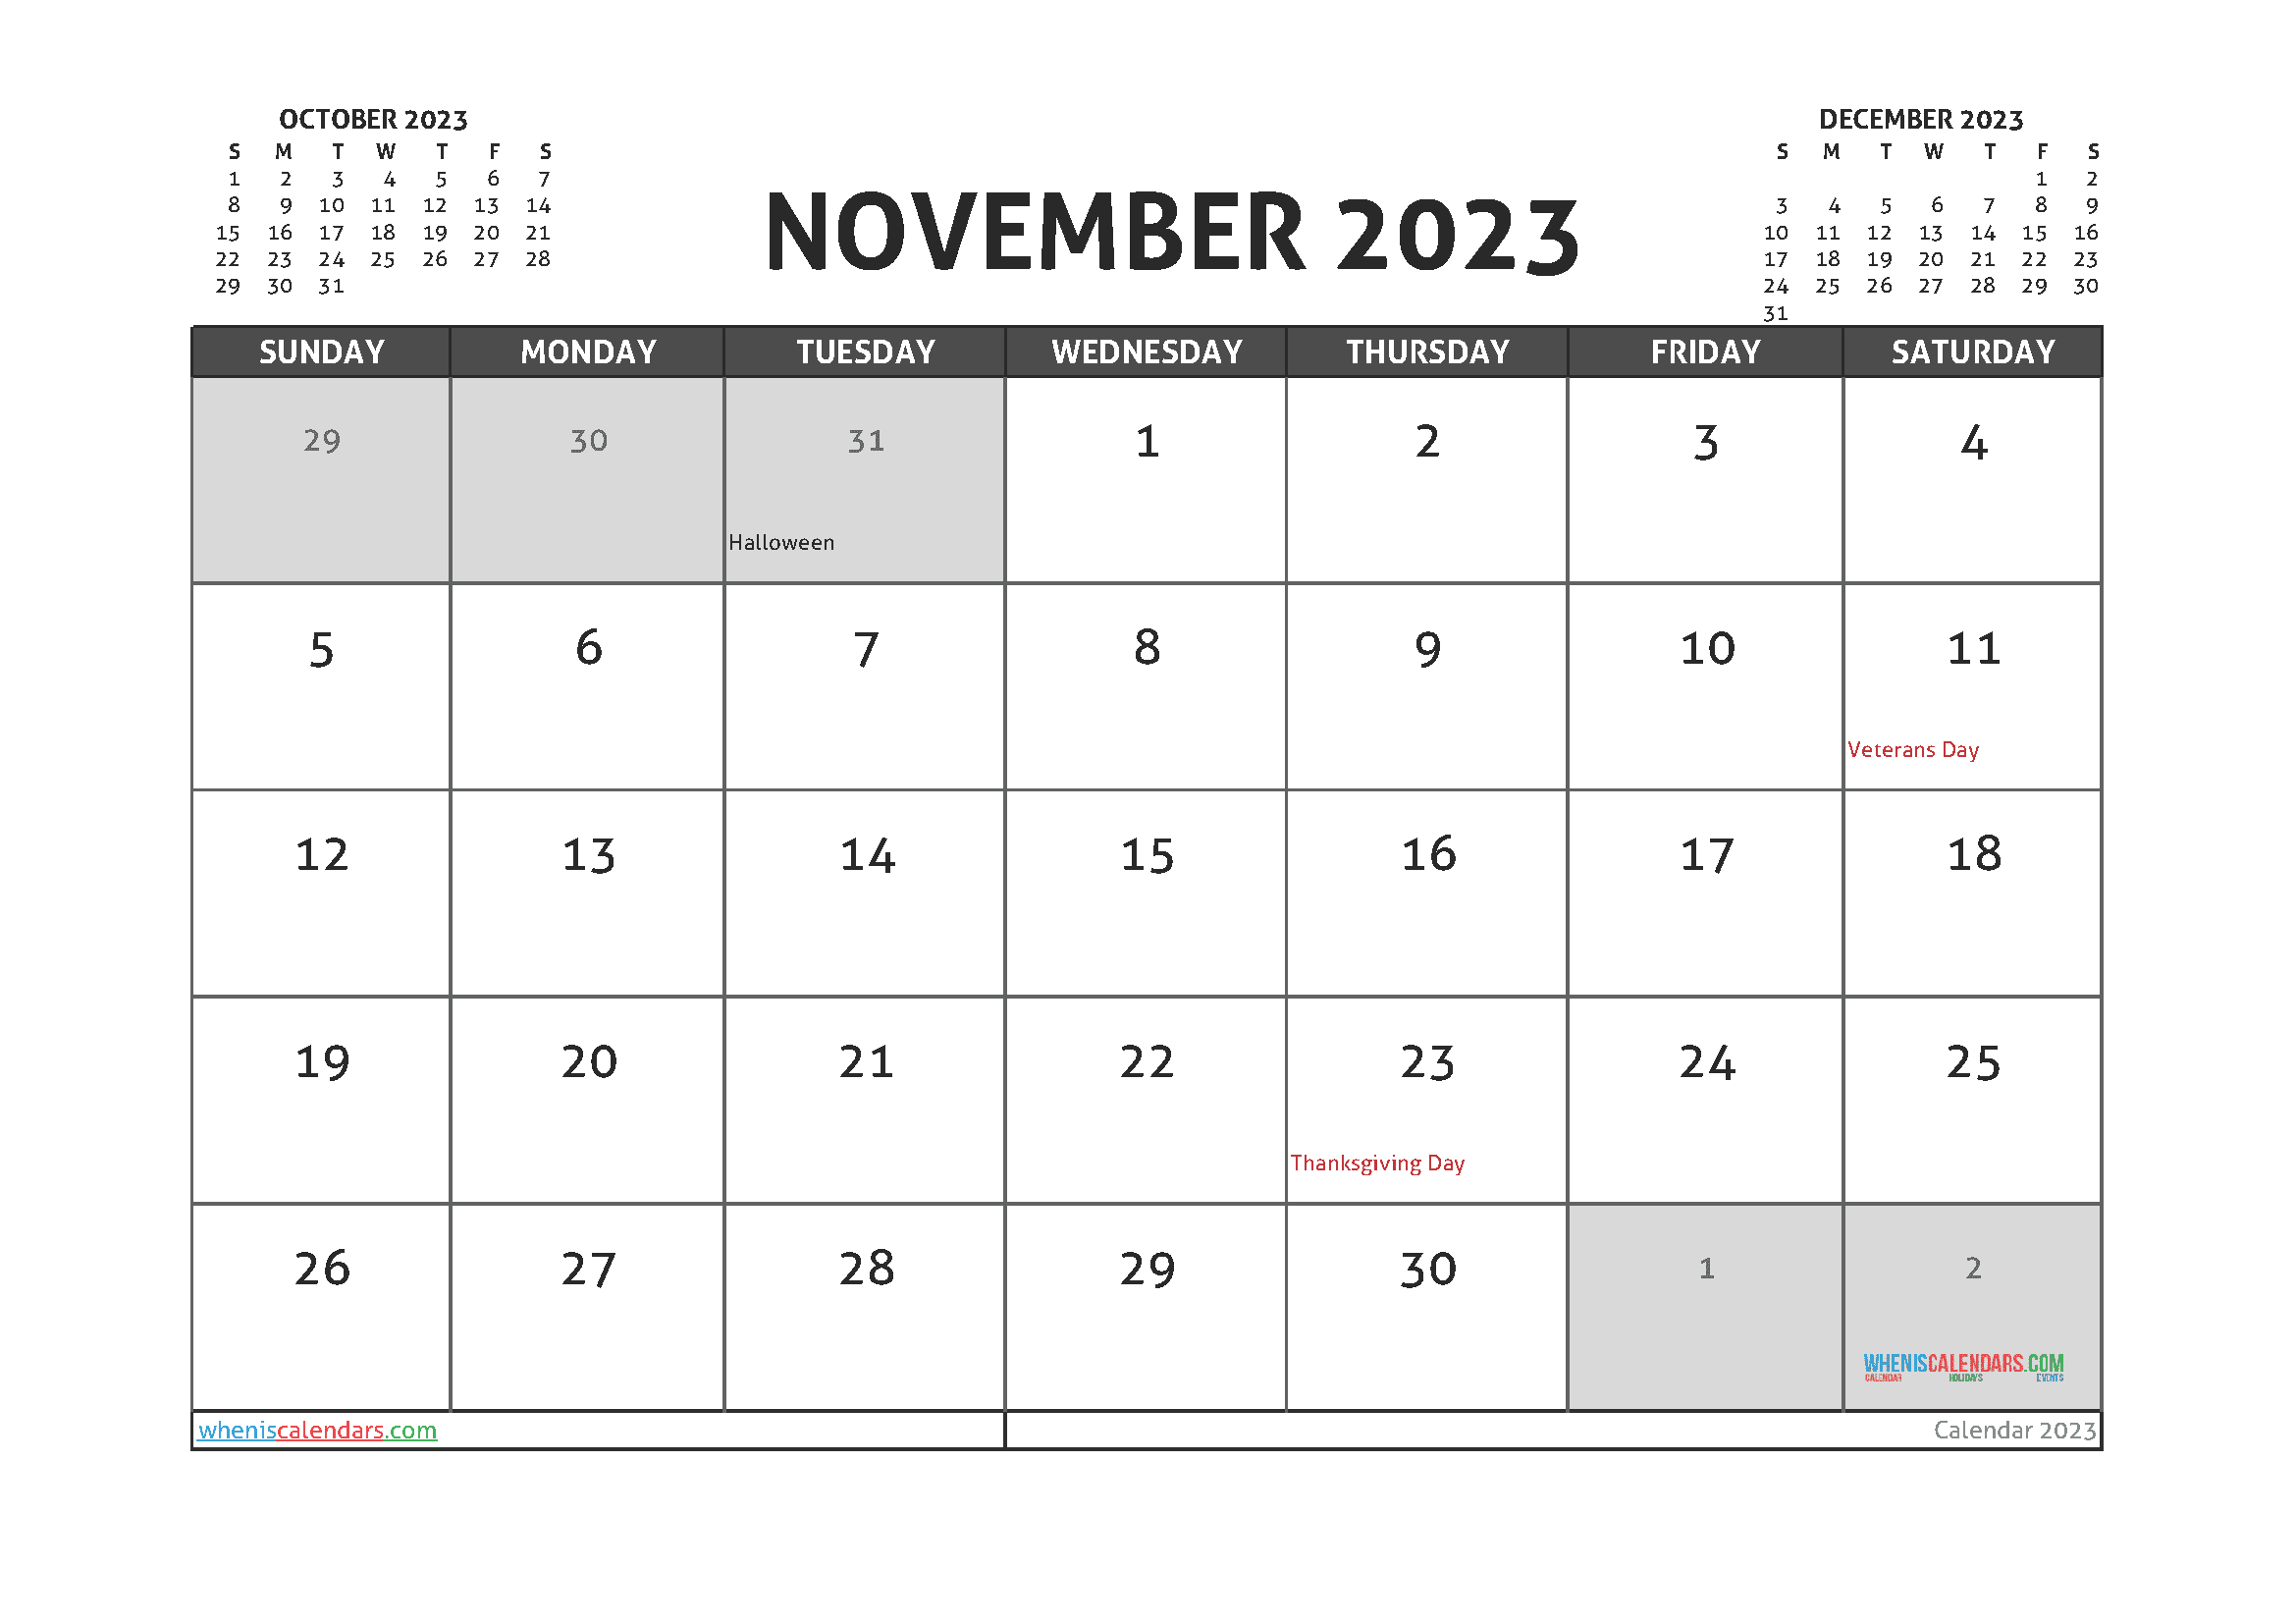 Free Calendar November 2023 with Holidays Printable PDF in Landscape